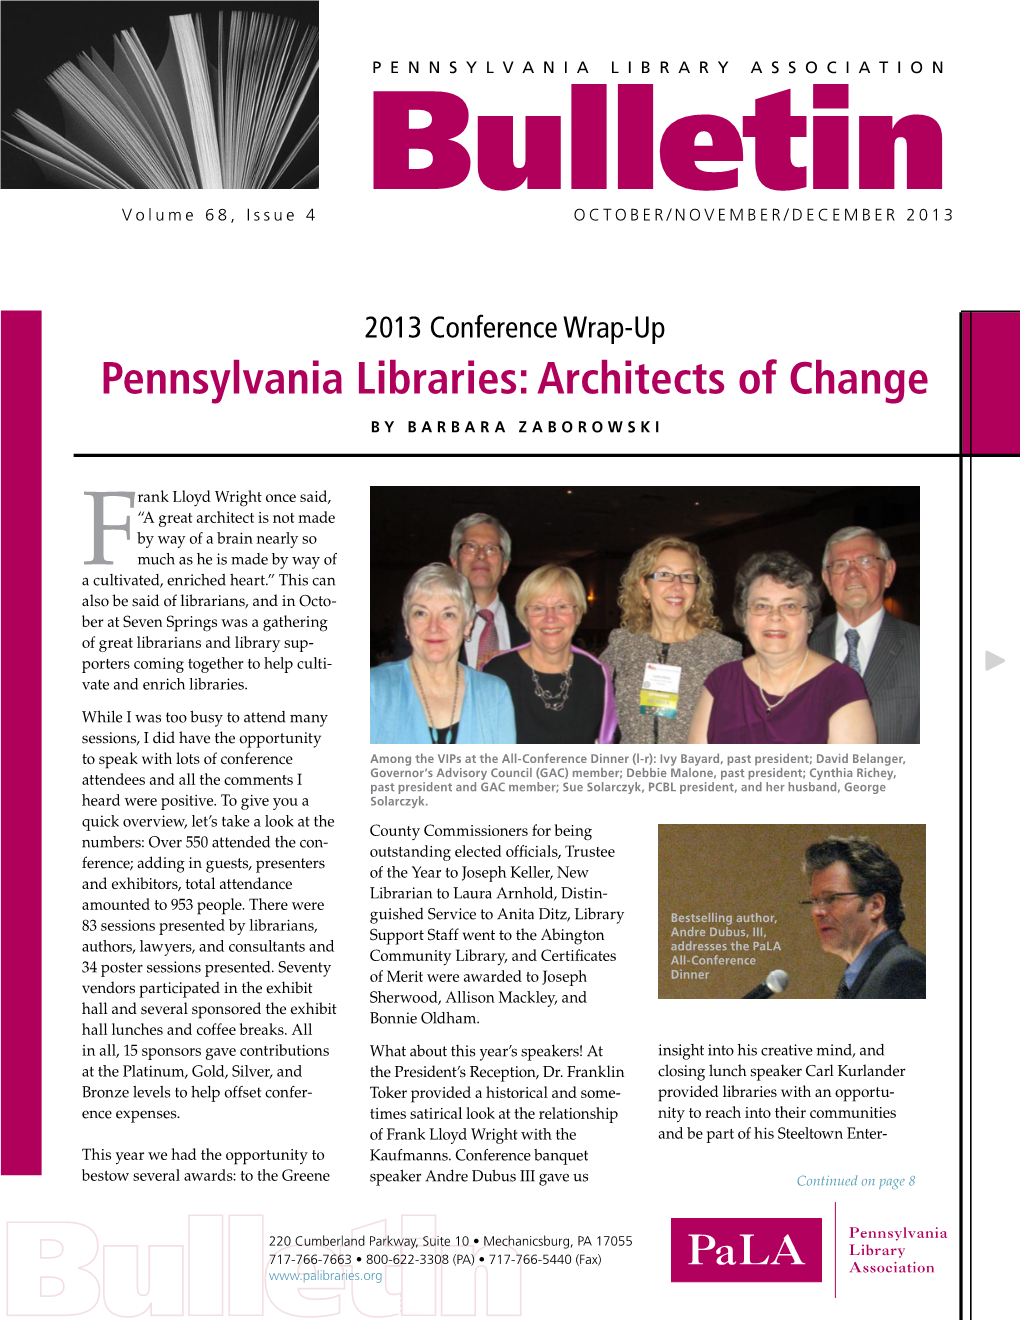 Pennsylvania Libraries: Architects of Change by Barbara Zaborowski